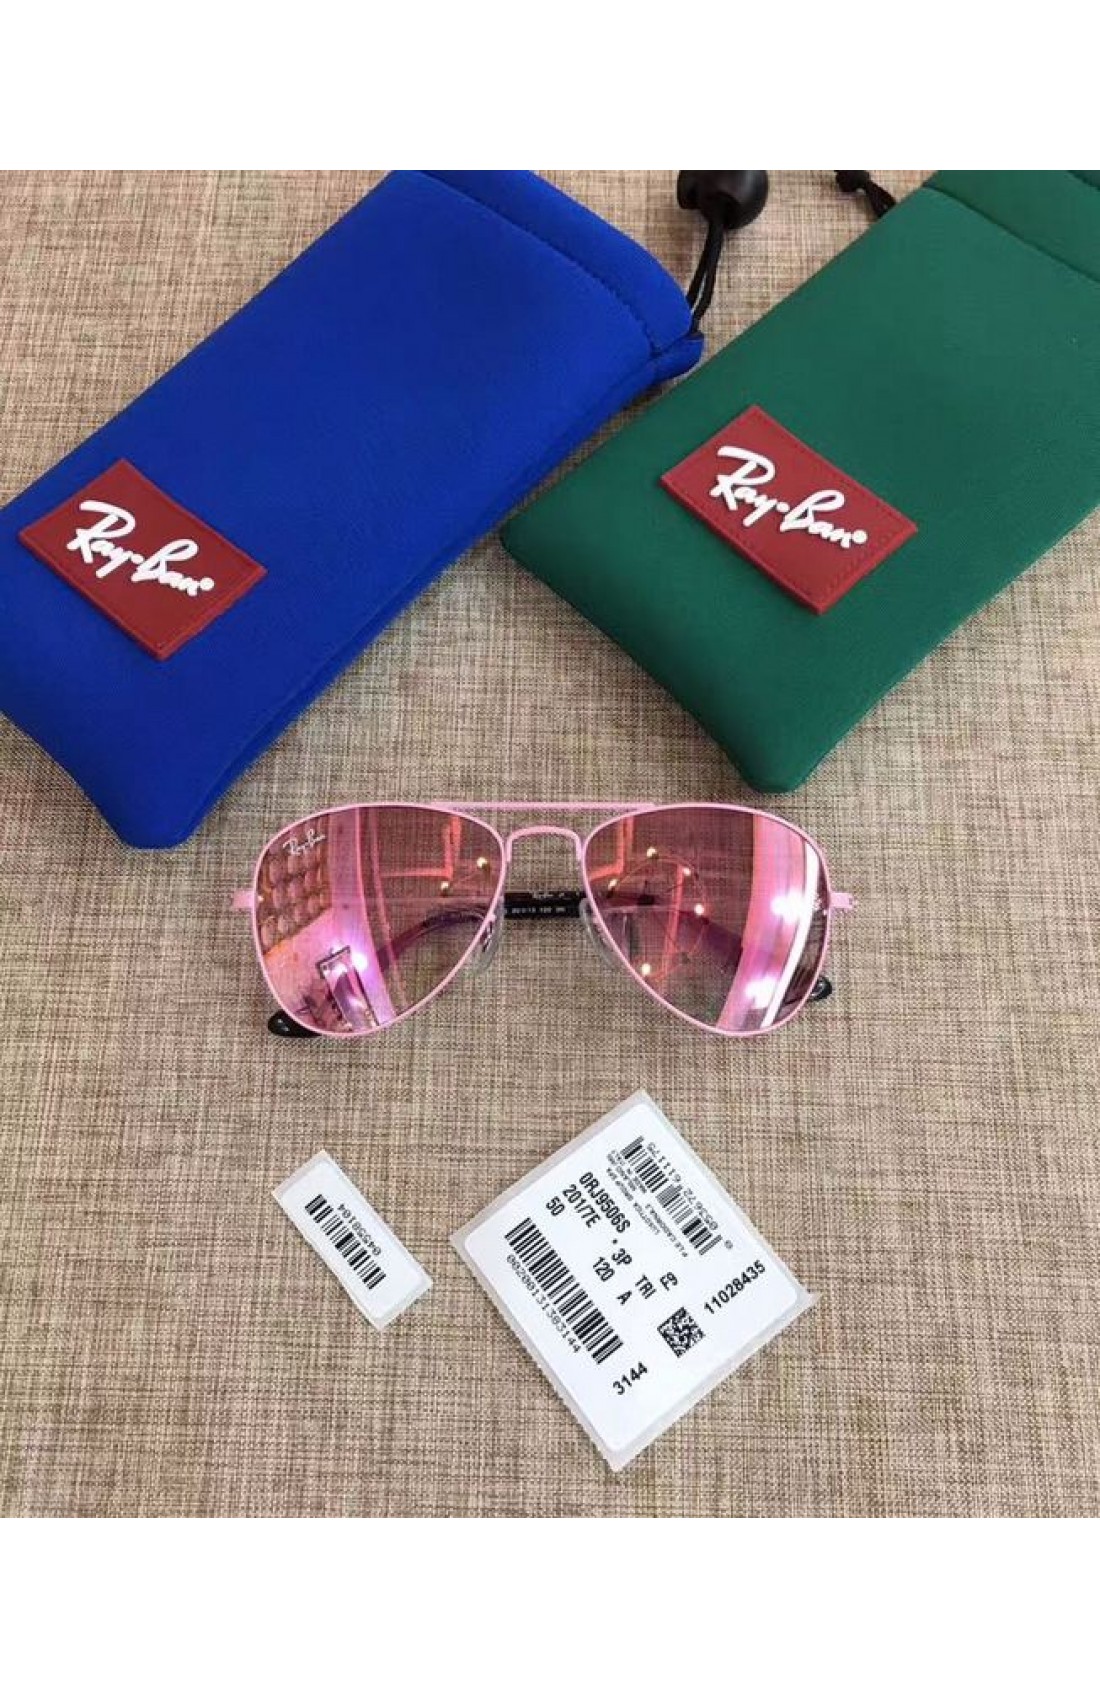 Ray Ban Polarized Aviator Sunglasses Pink